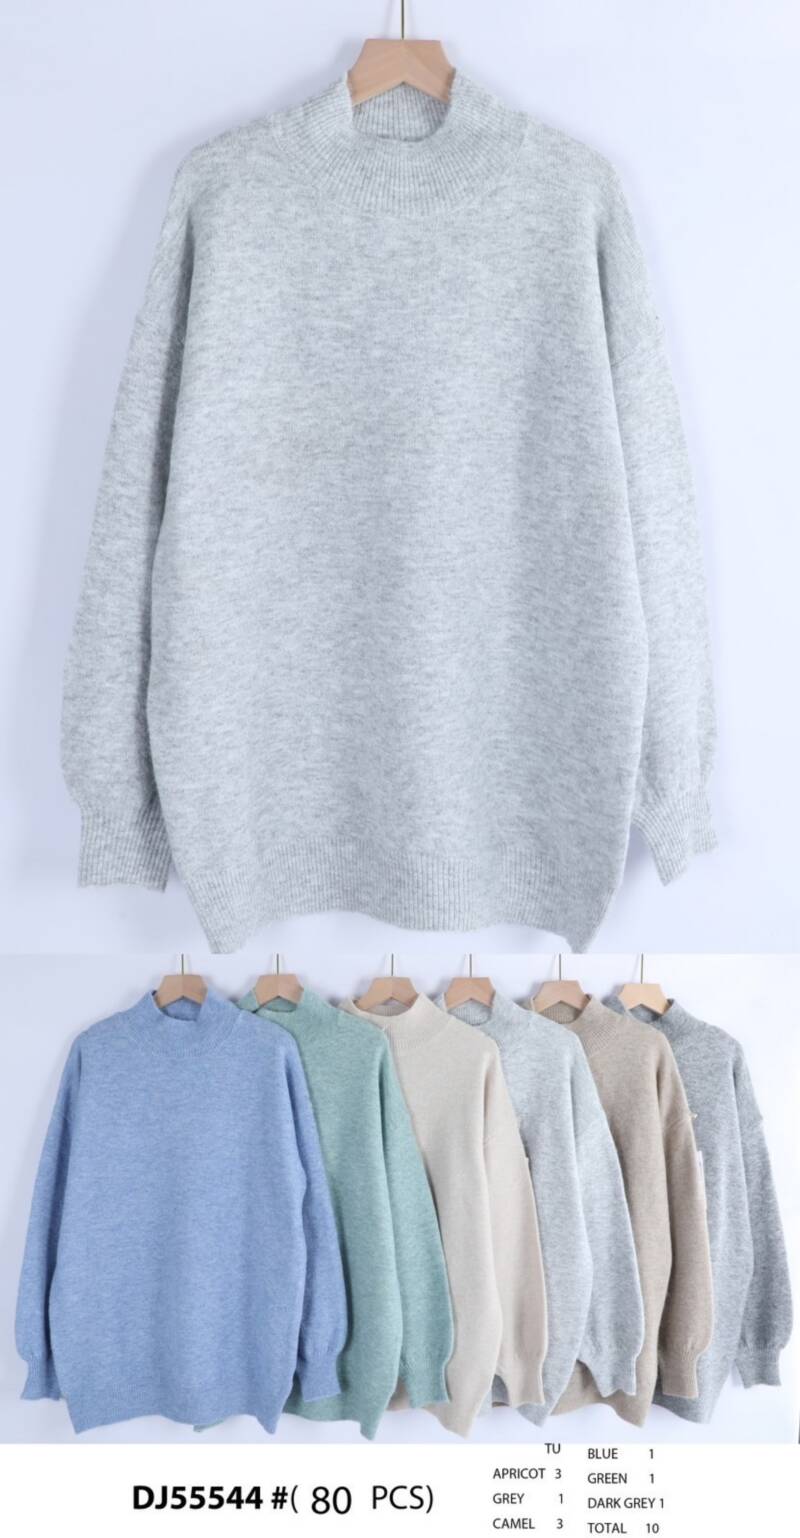   Swetry damska (Francja produkt) Roz Standard .Mix kolor, Paszka 10 szt